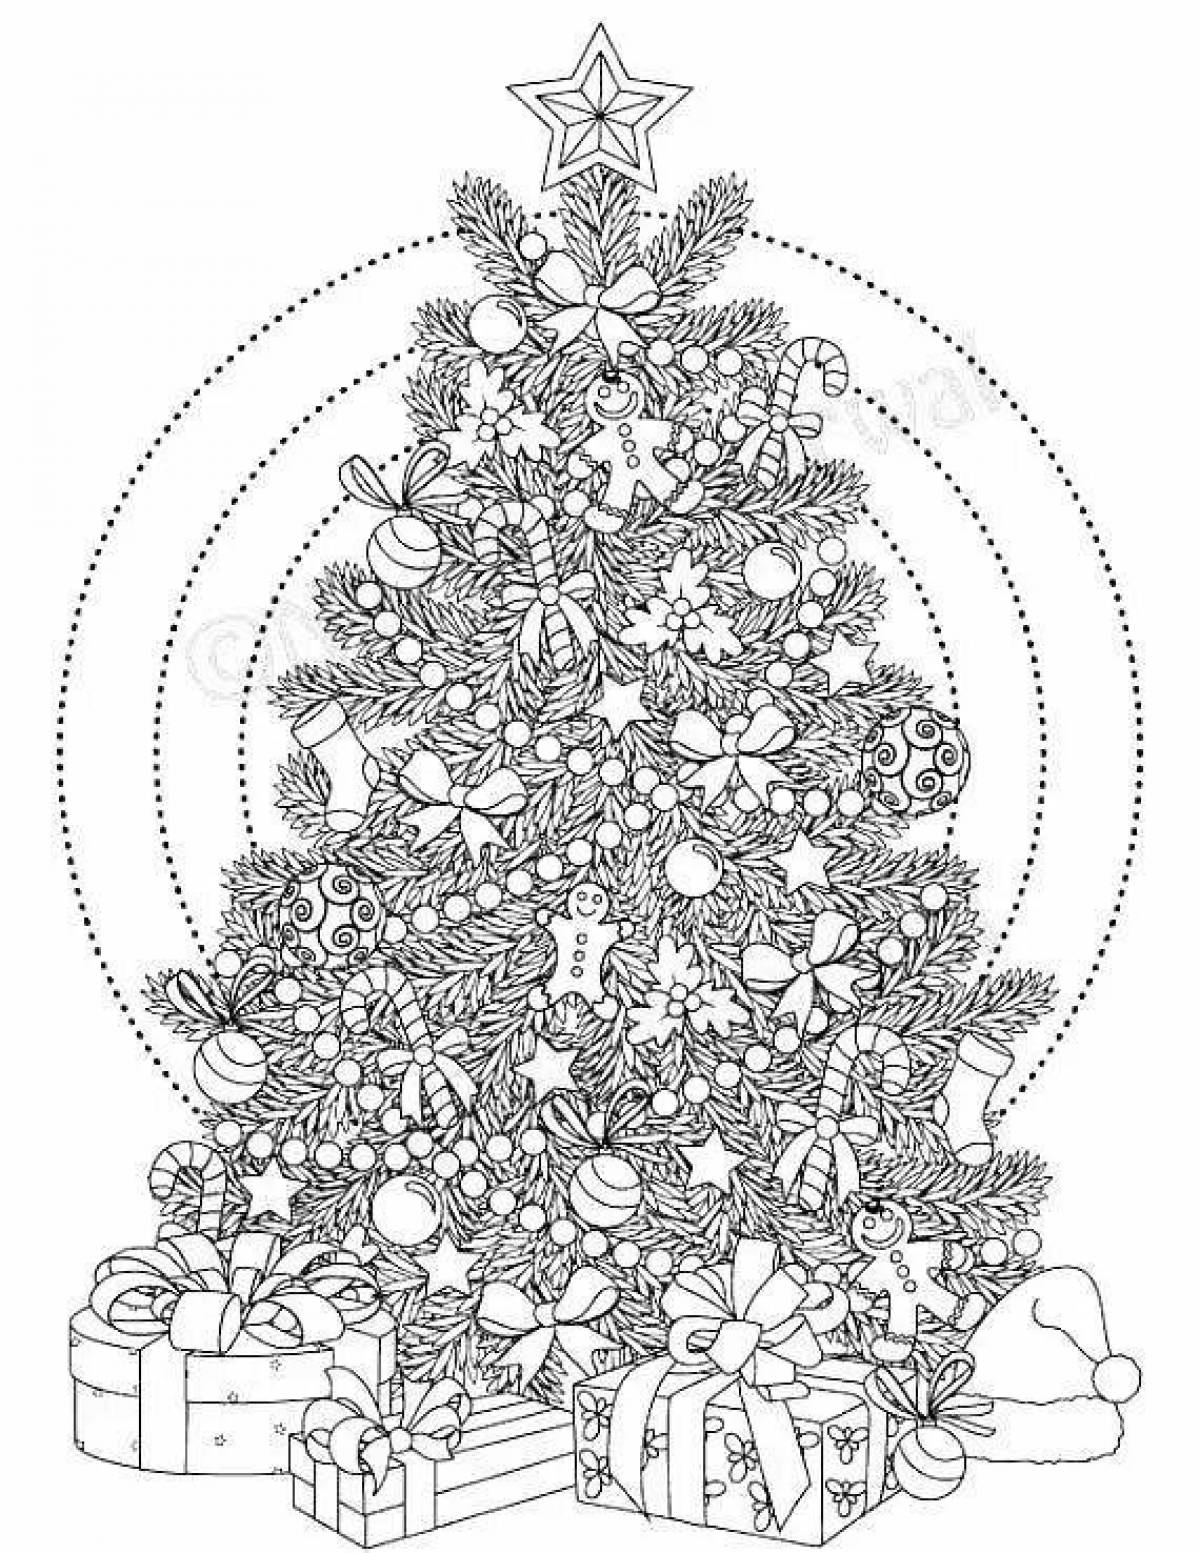 Complex Christmas complex coloring